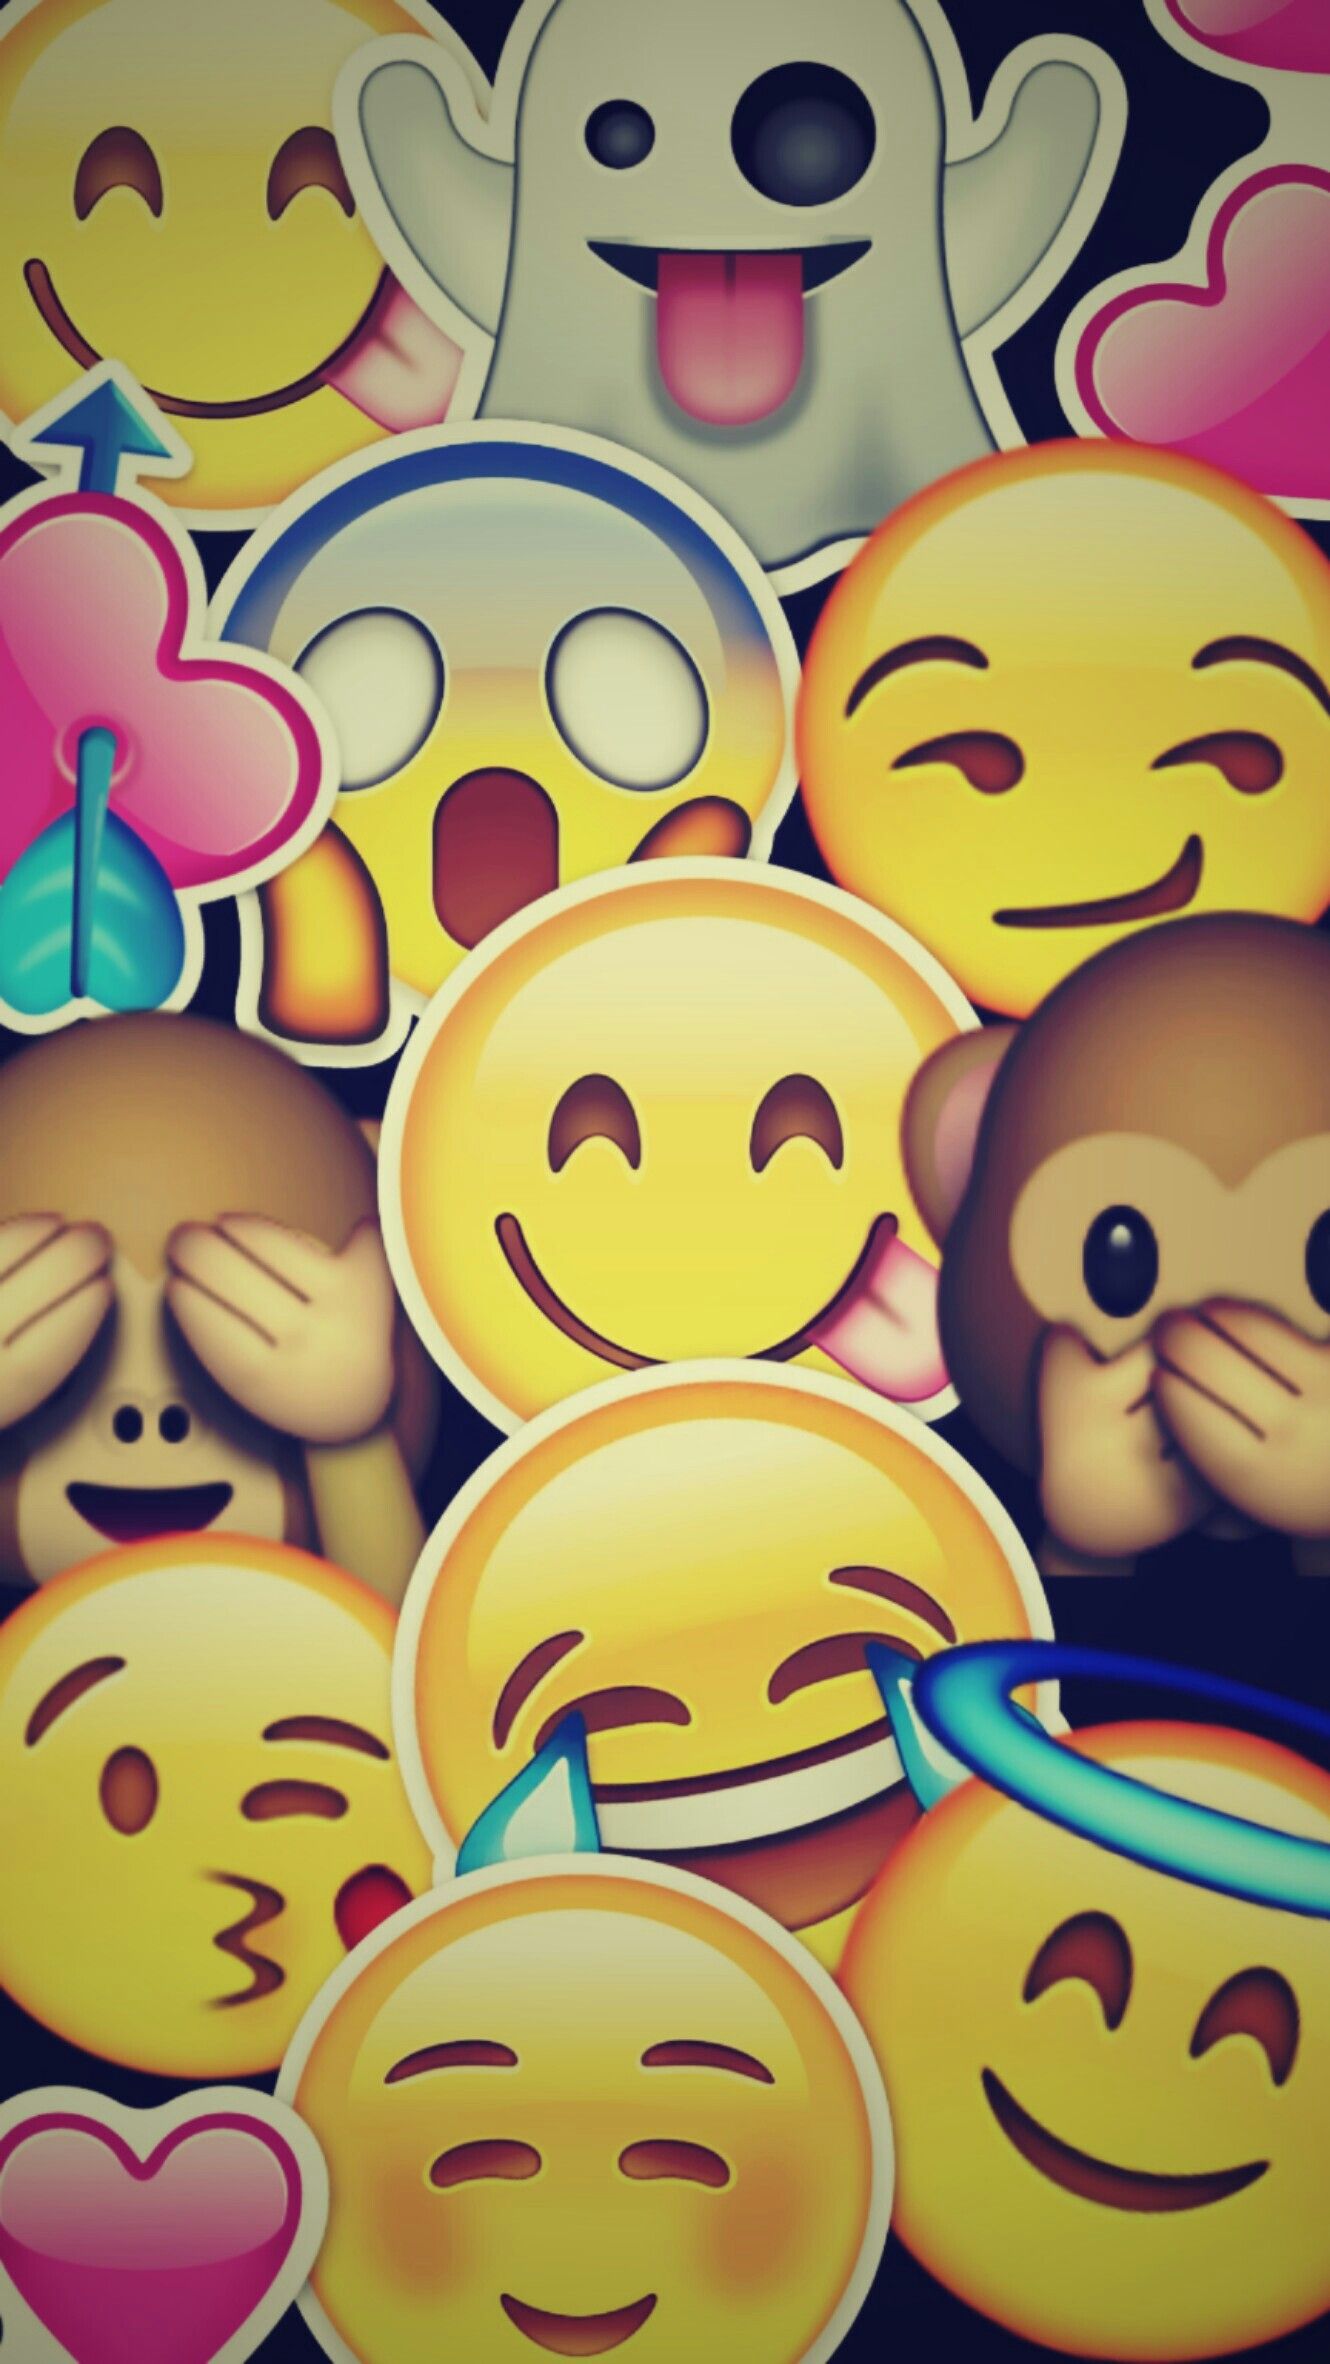 Wallpapers Of Emojis Wallpapers